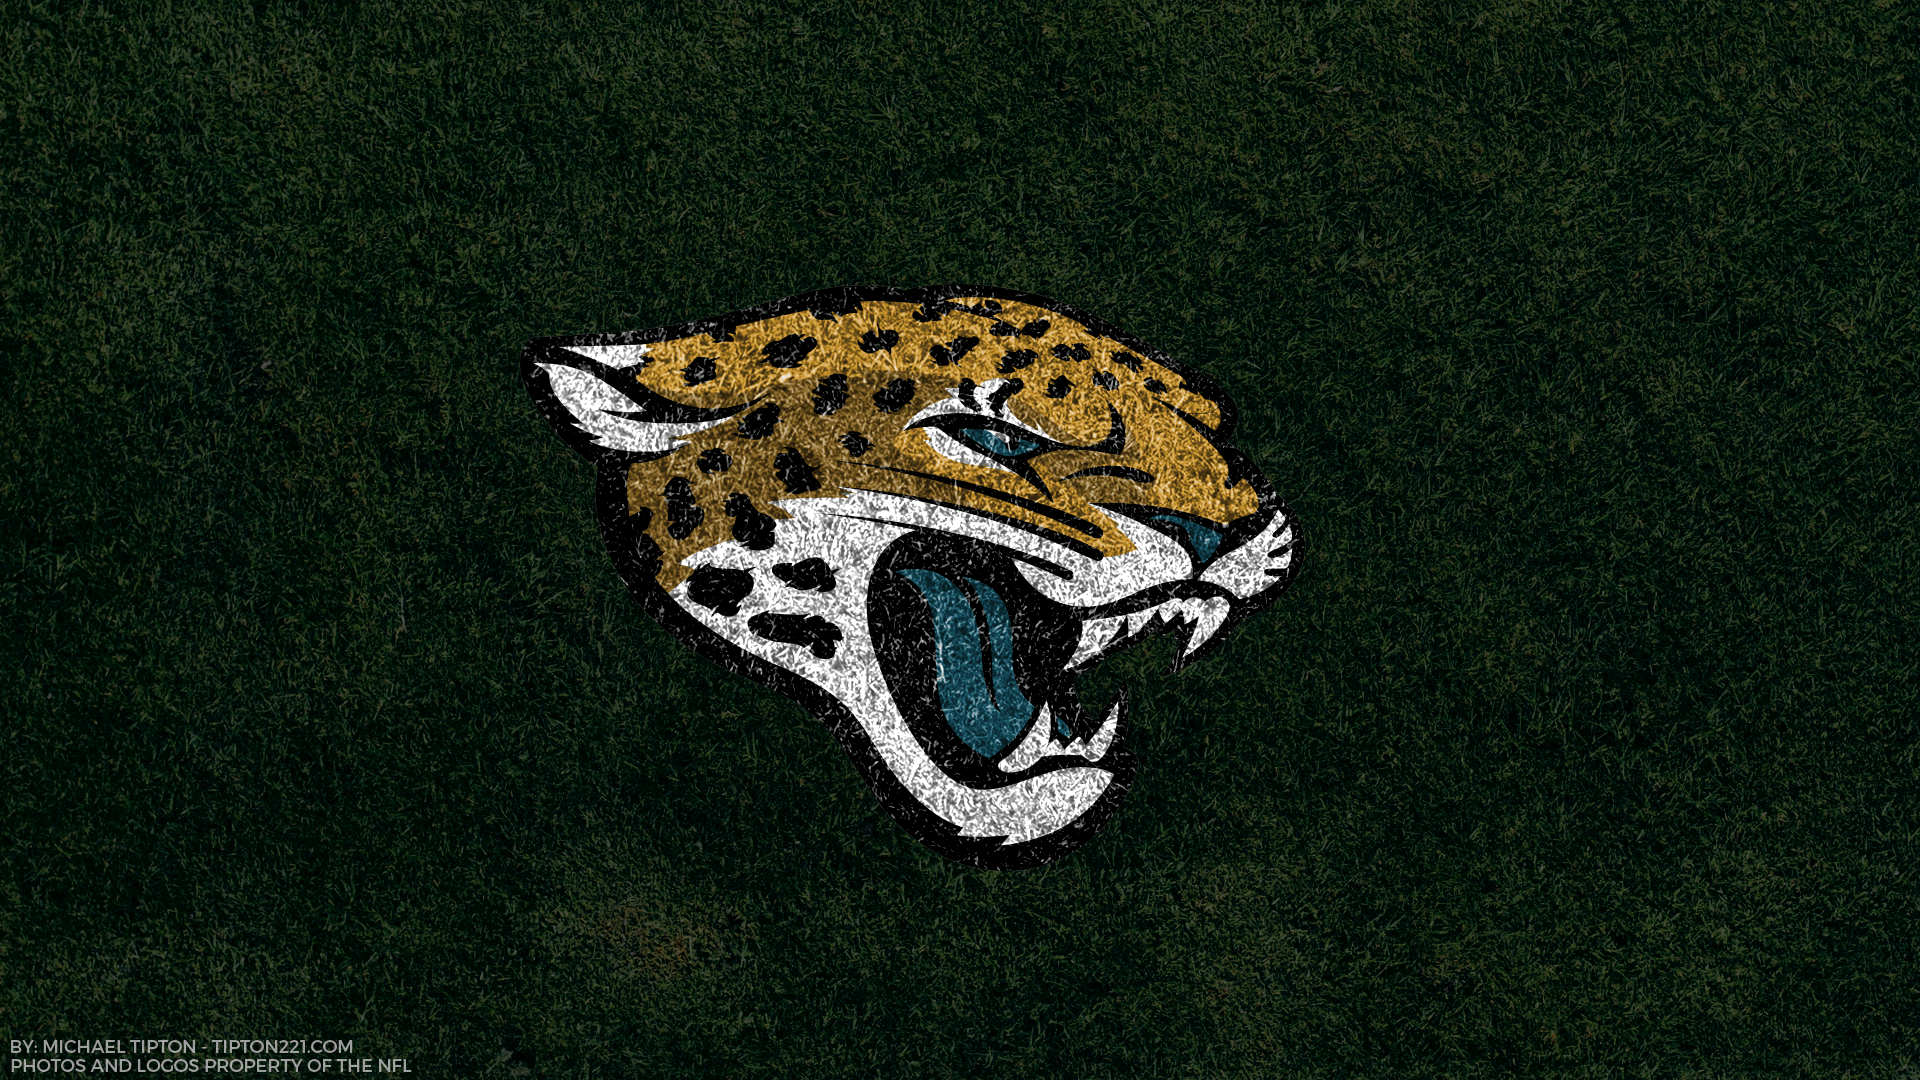 Jackson Jaguars Logo - 2018 Jacksonville Jaguars Wallpapers - PC |iPhone| Android